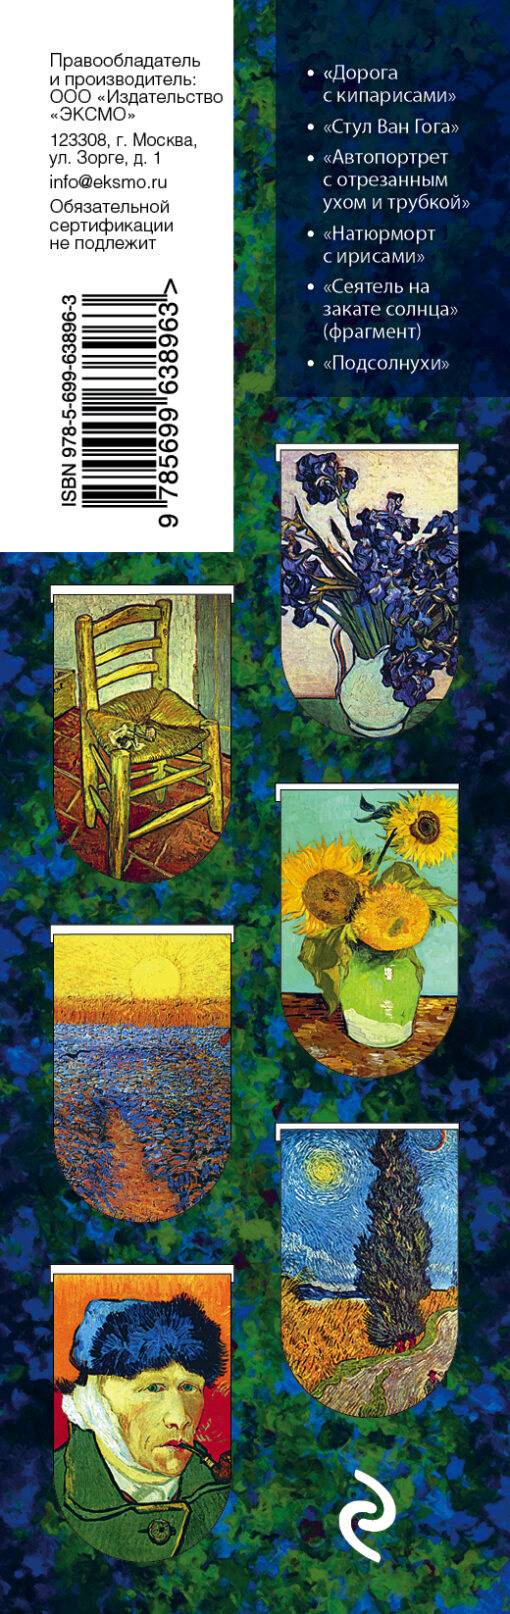 Magnetic bookmarks. van Gogh